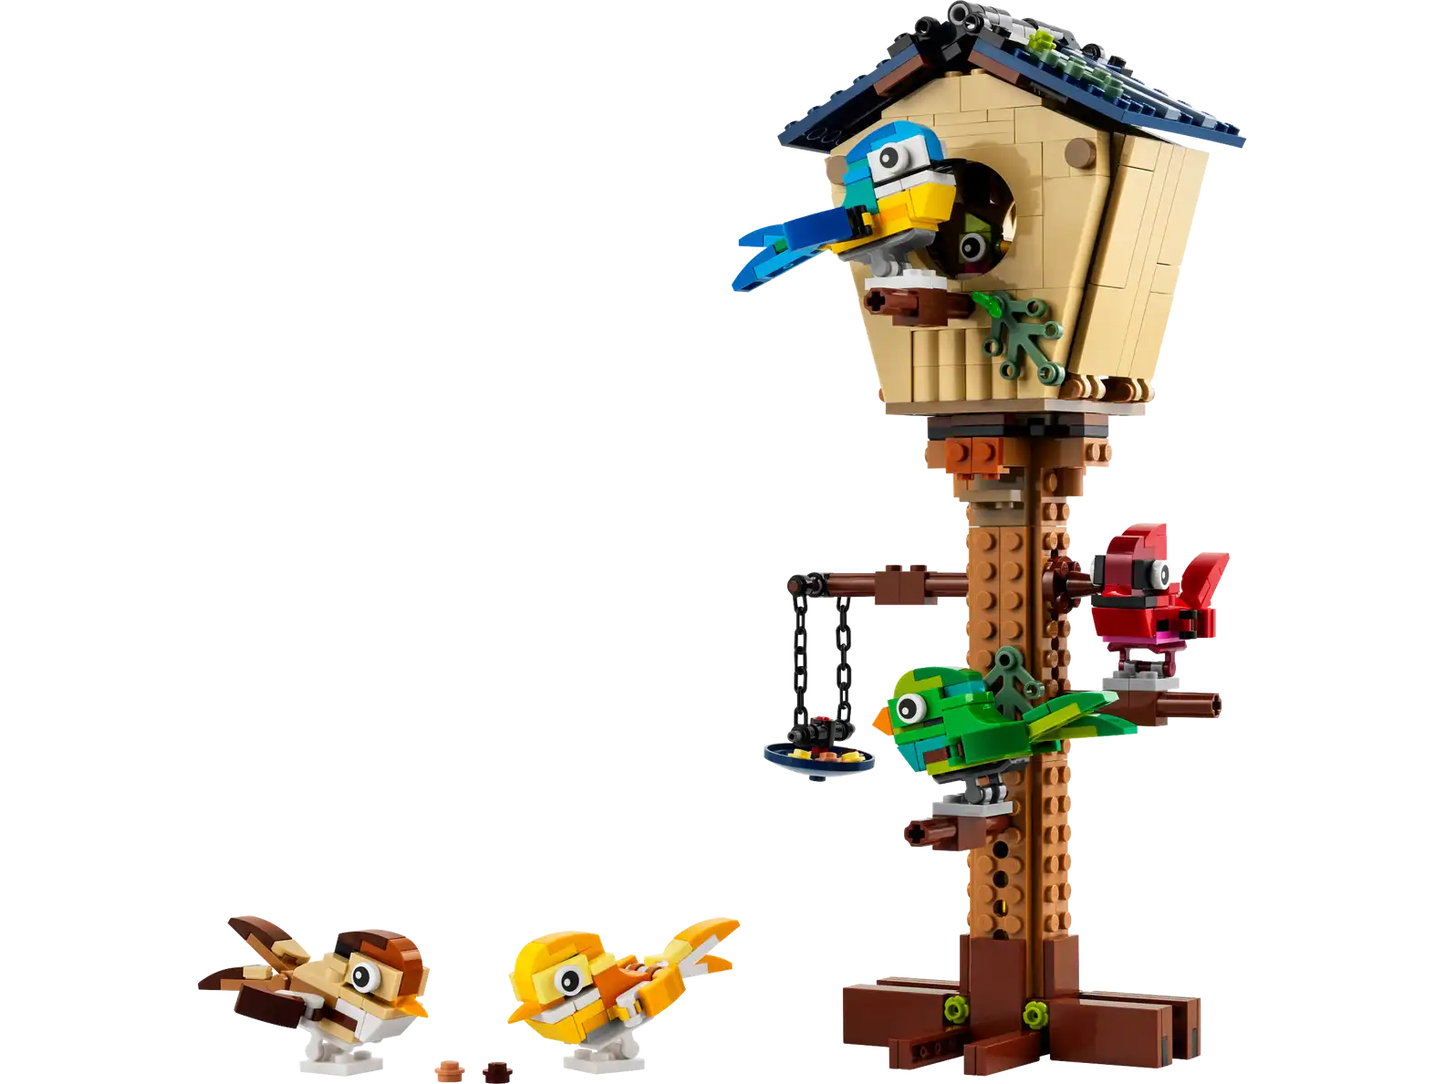 Birdhouse Lego 31143